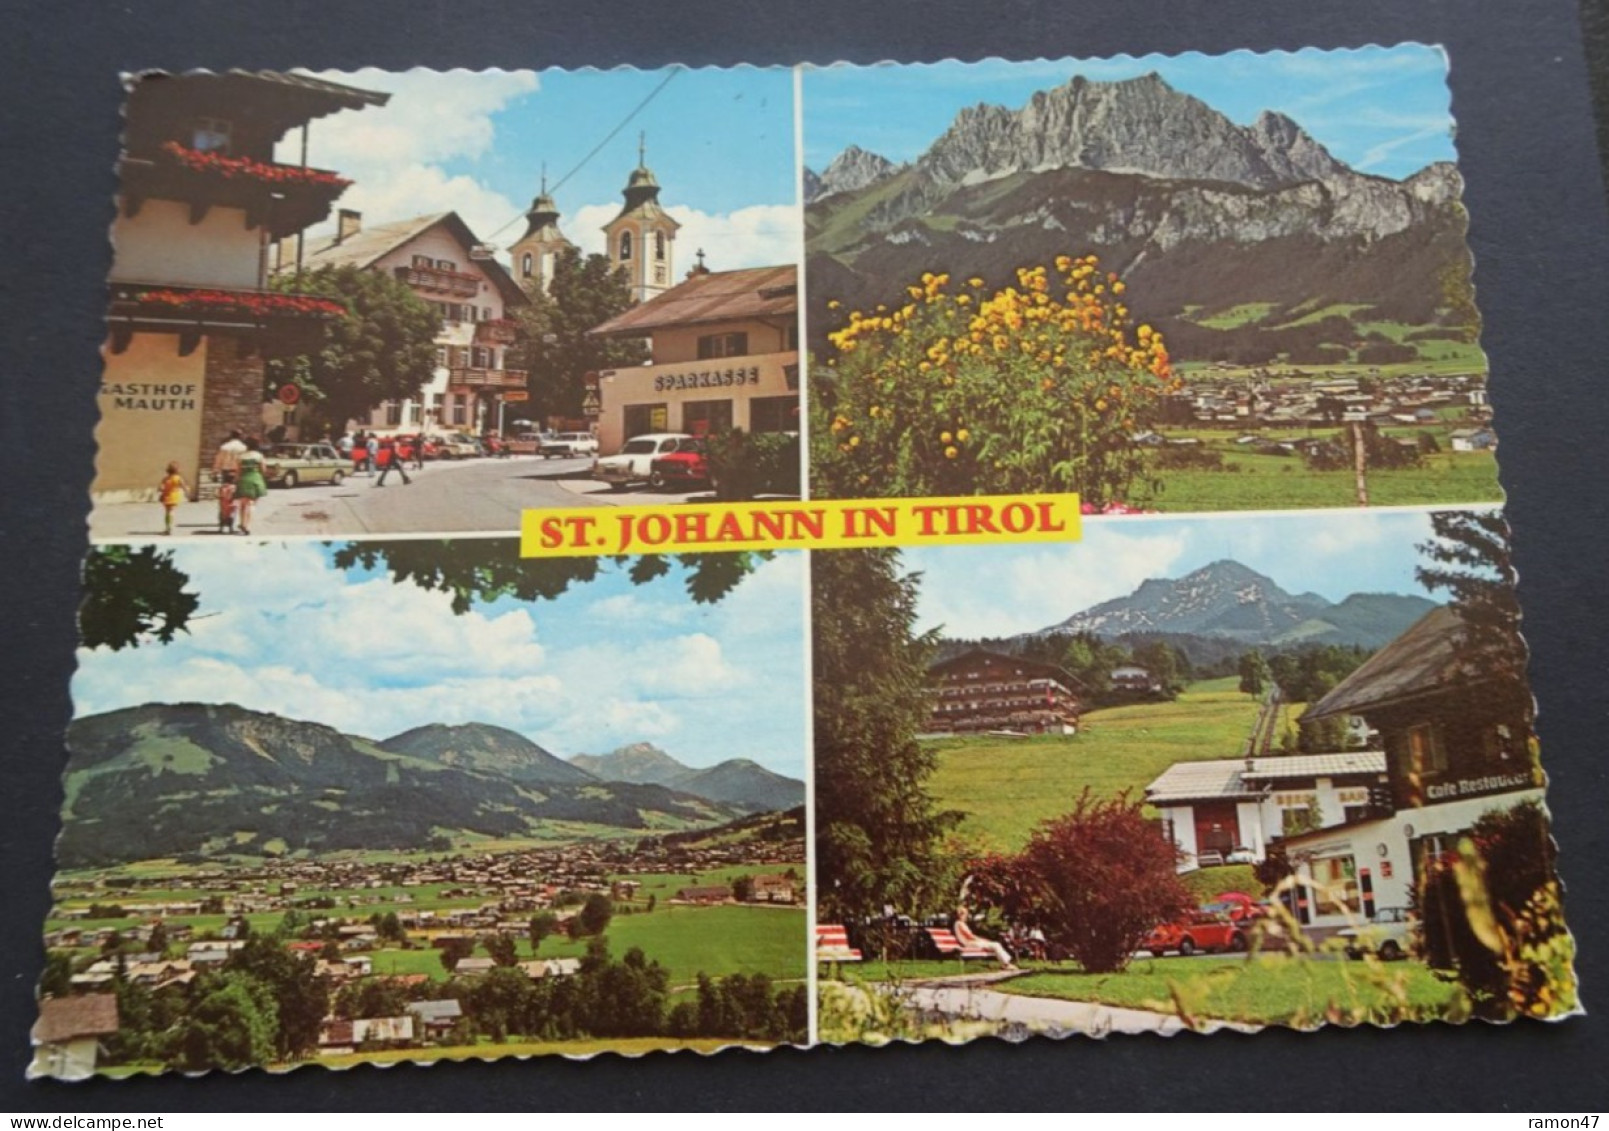 St. Johann In Tirol - Aufnahme "Wilder Kaiser-Verlag", Fotohaus R. Jöchler, St. Johann - # 3691 - St. Johann In Tirol